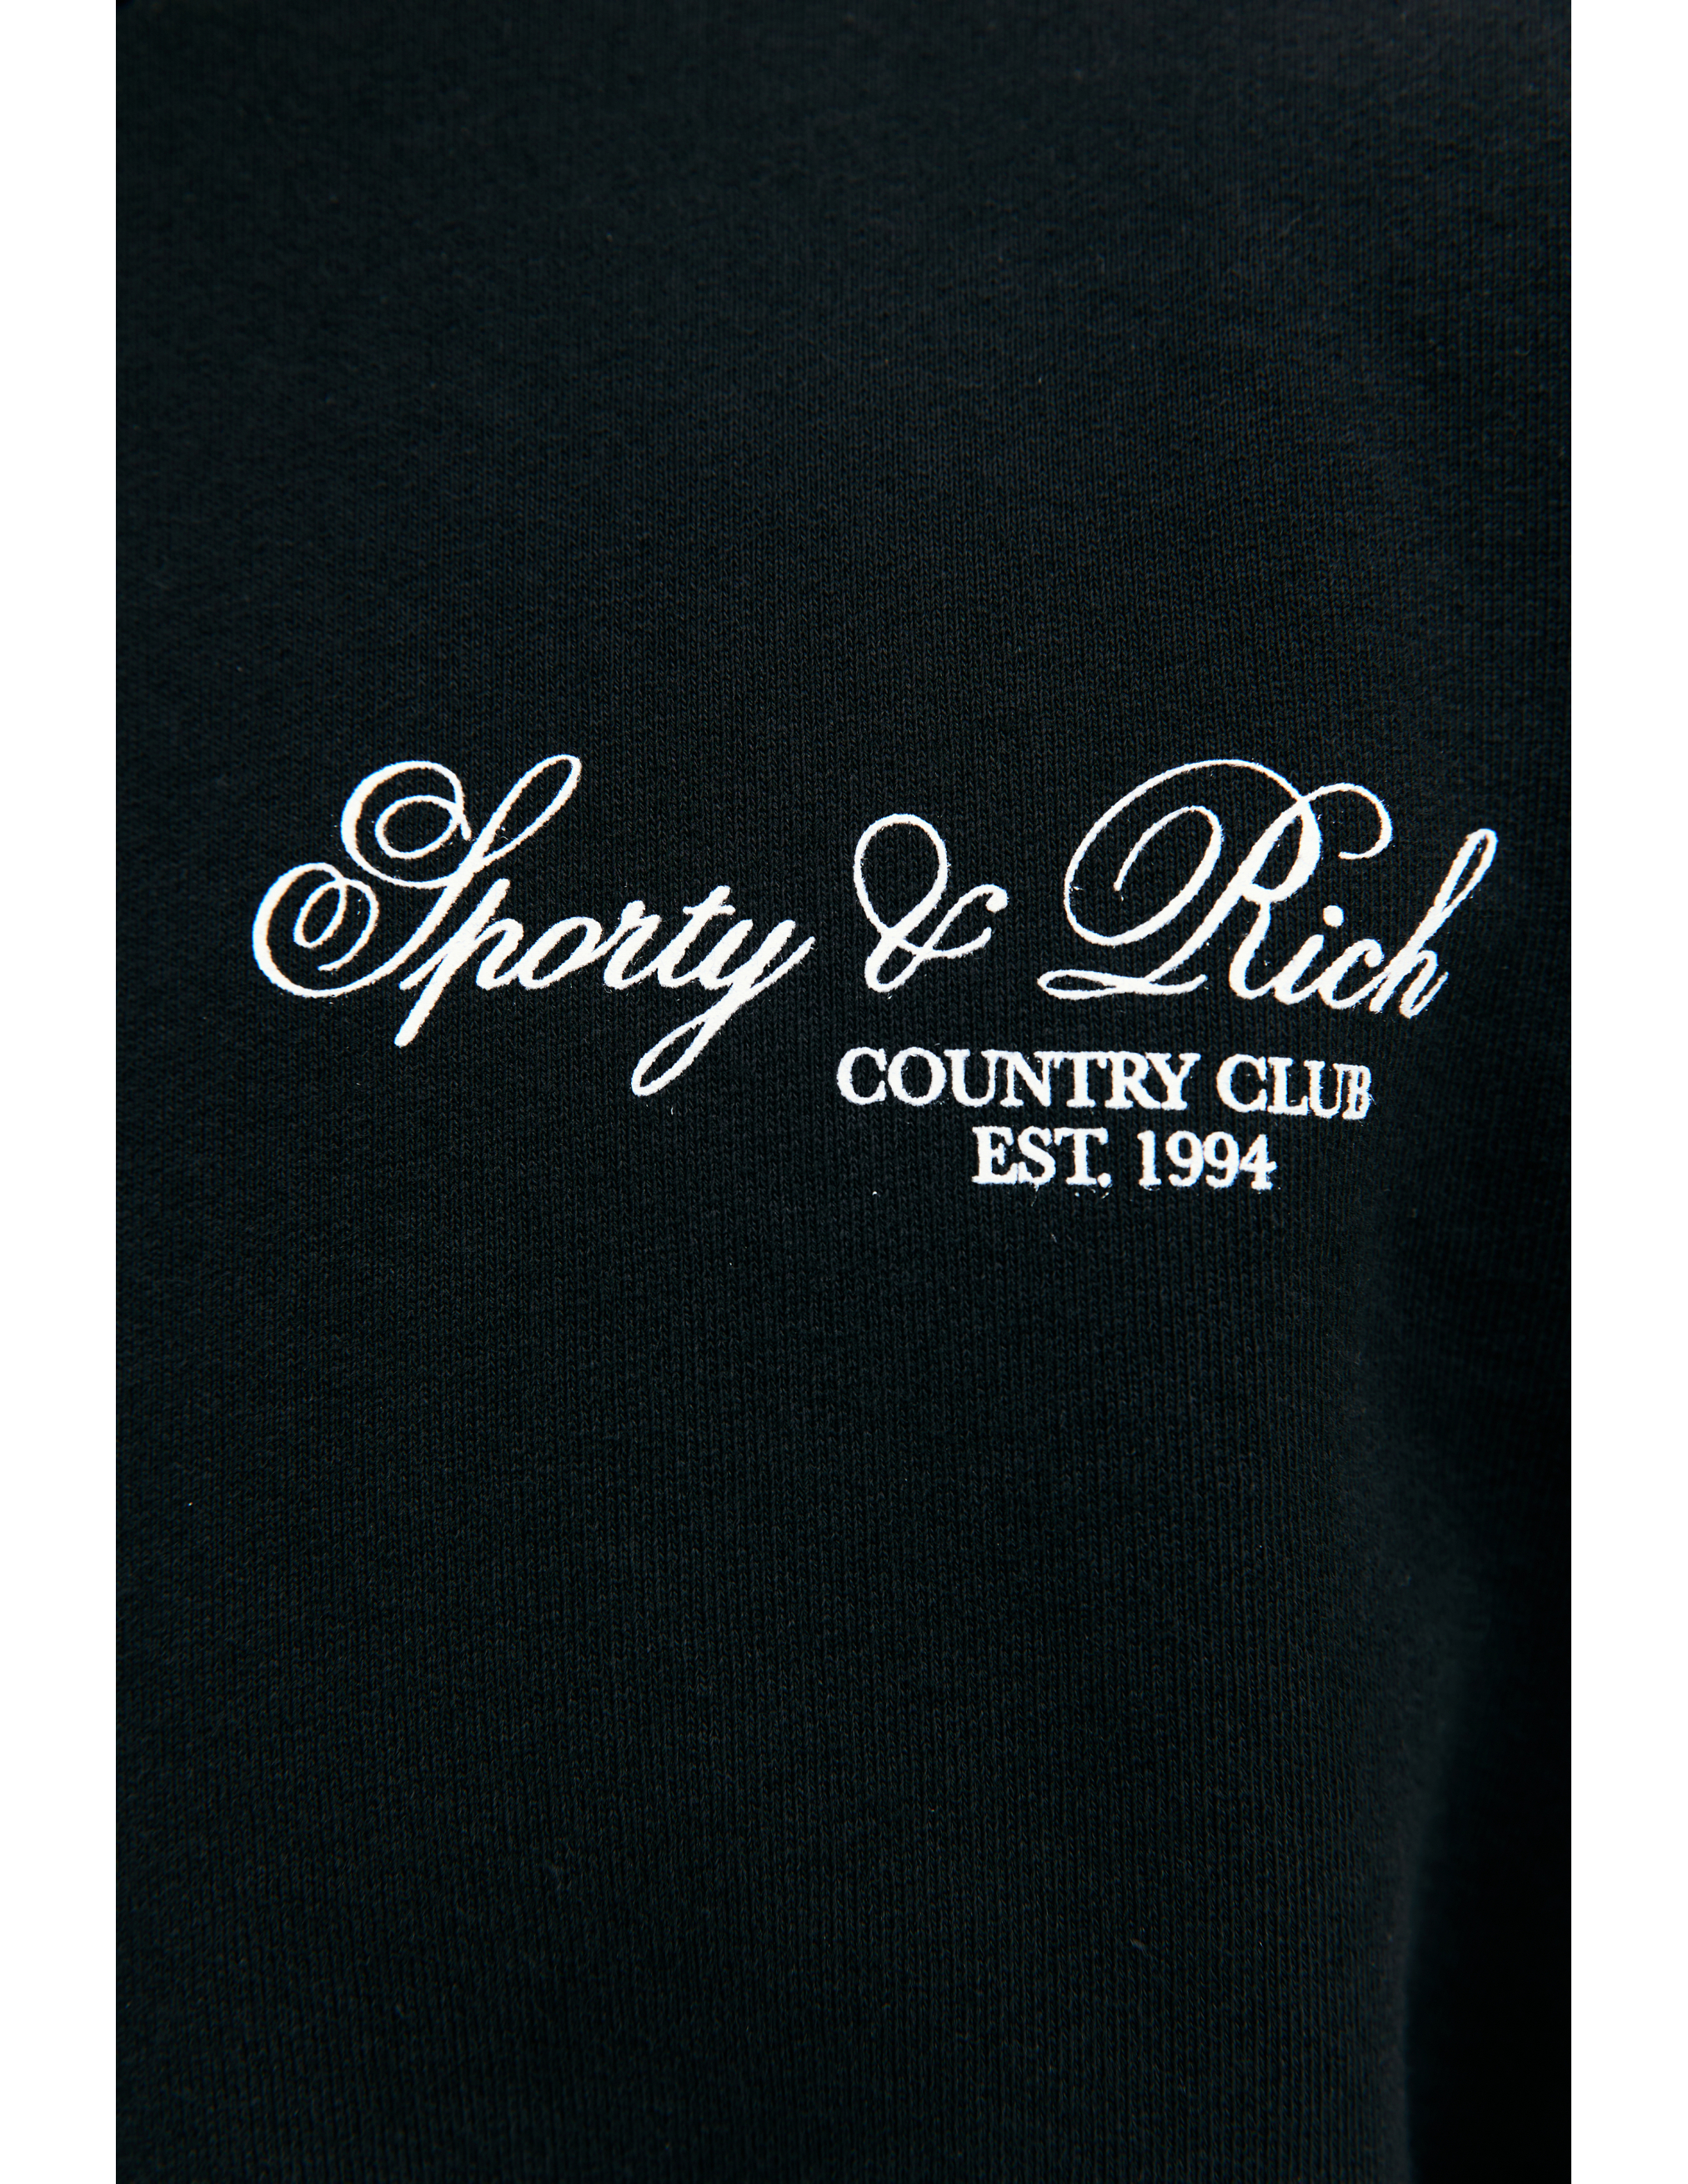 Черный свитшот с принтом Country Club SPORTY & RICH CR844BK, размер S;M;L;XL - фото 4